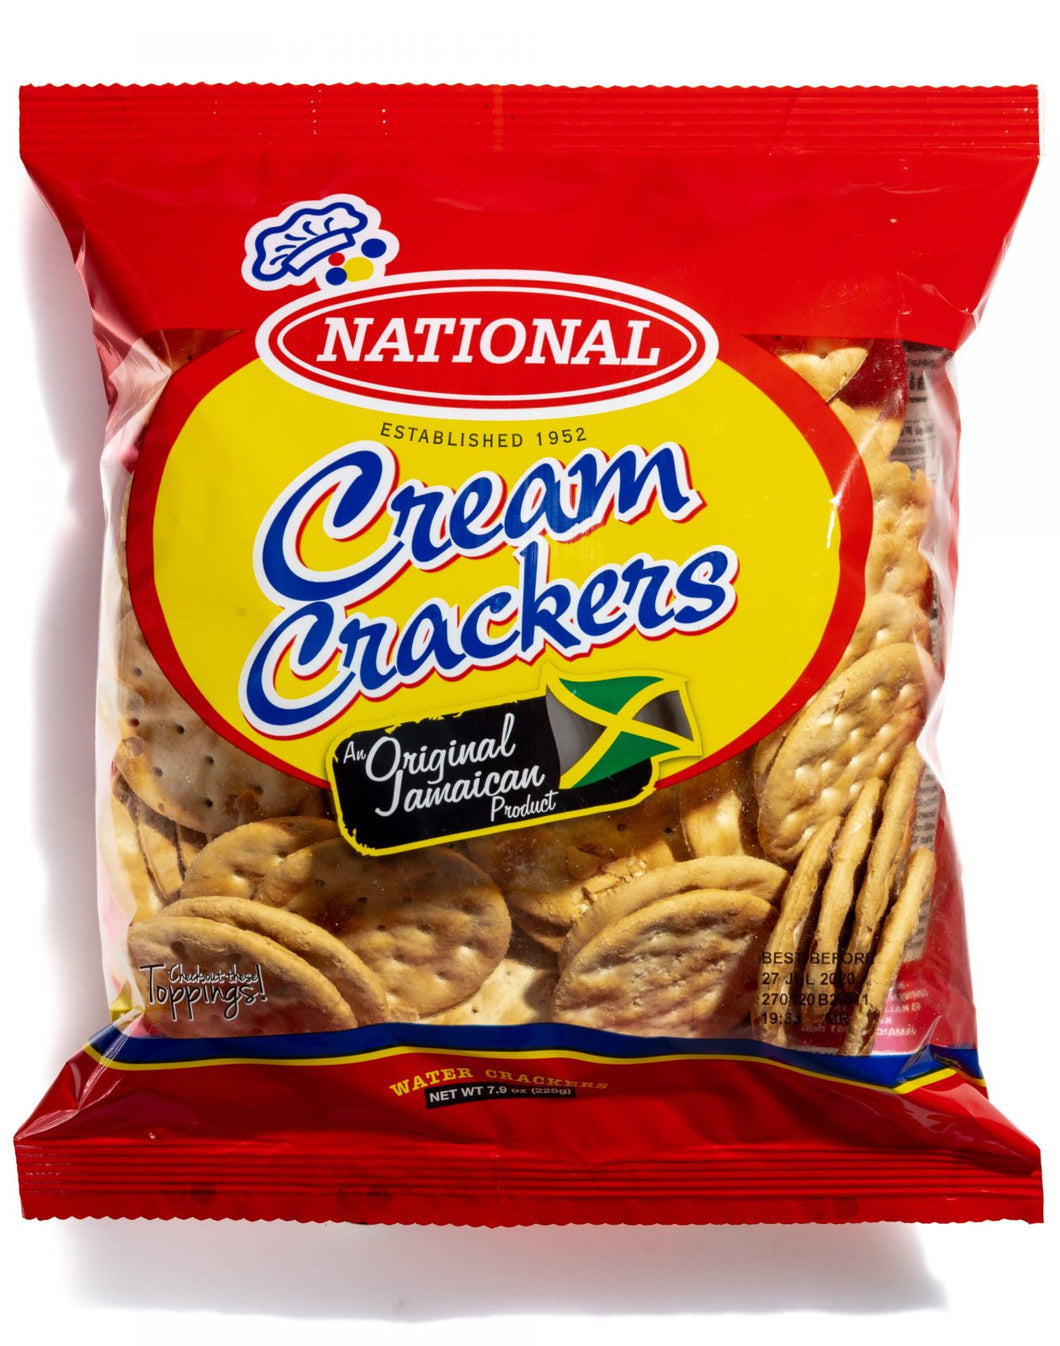 National Cream Crackers